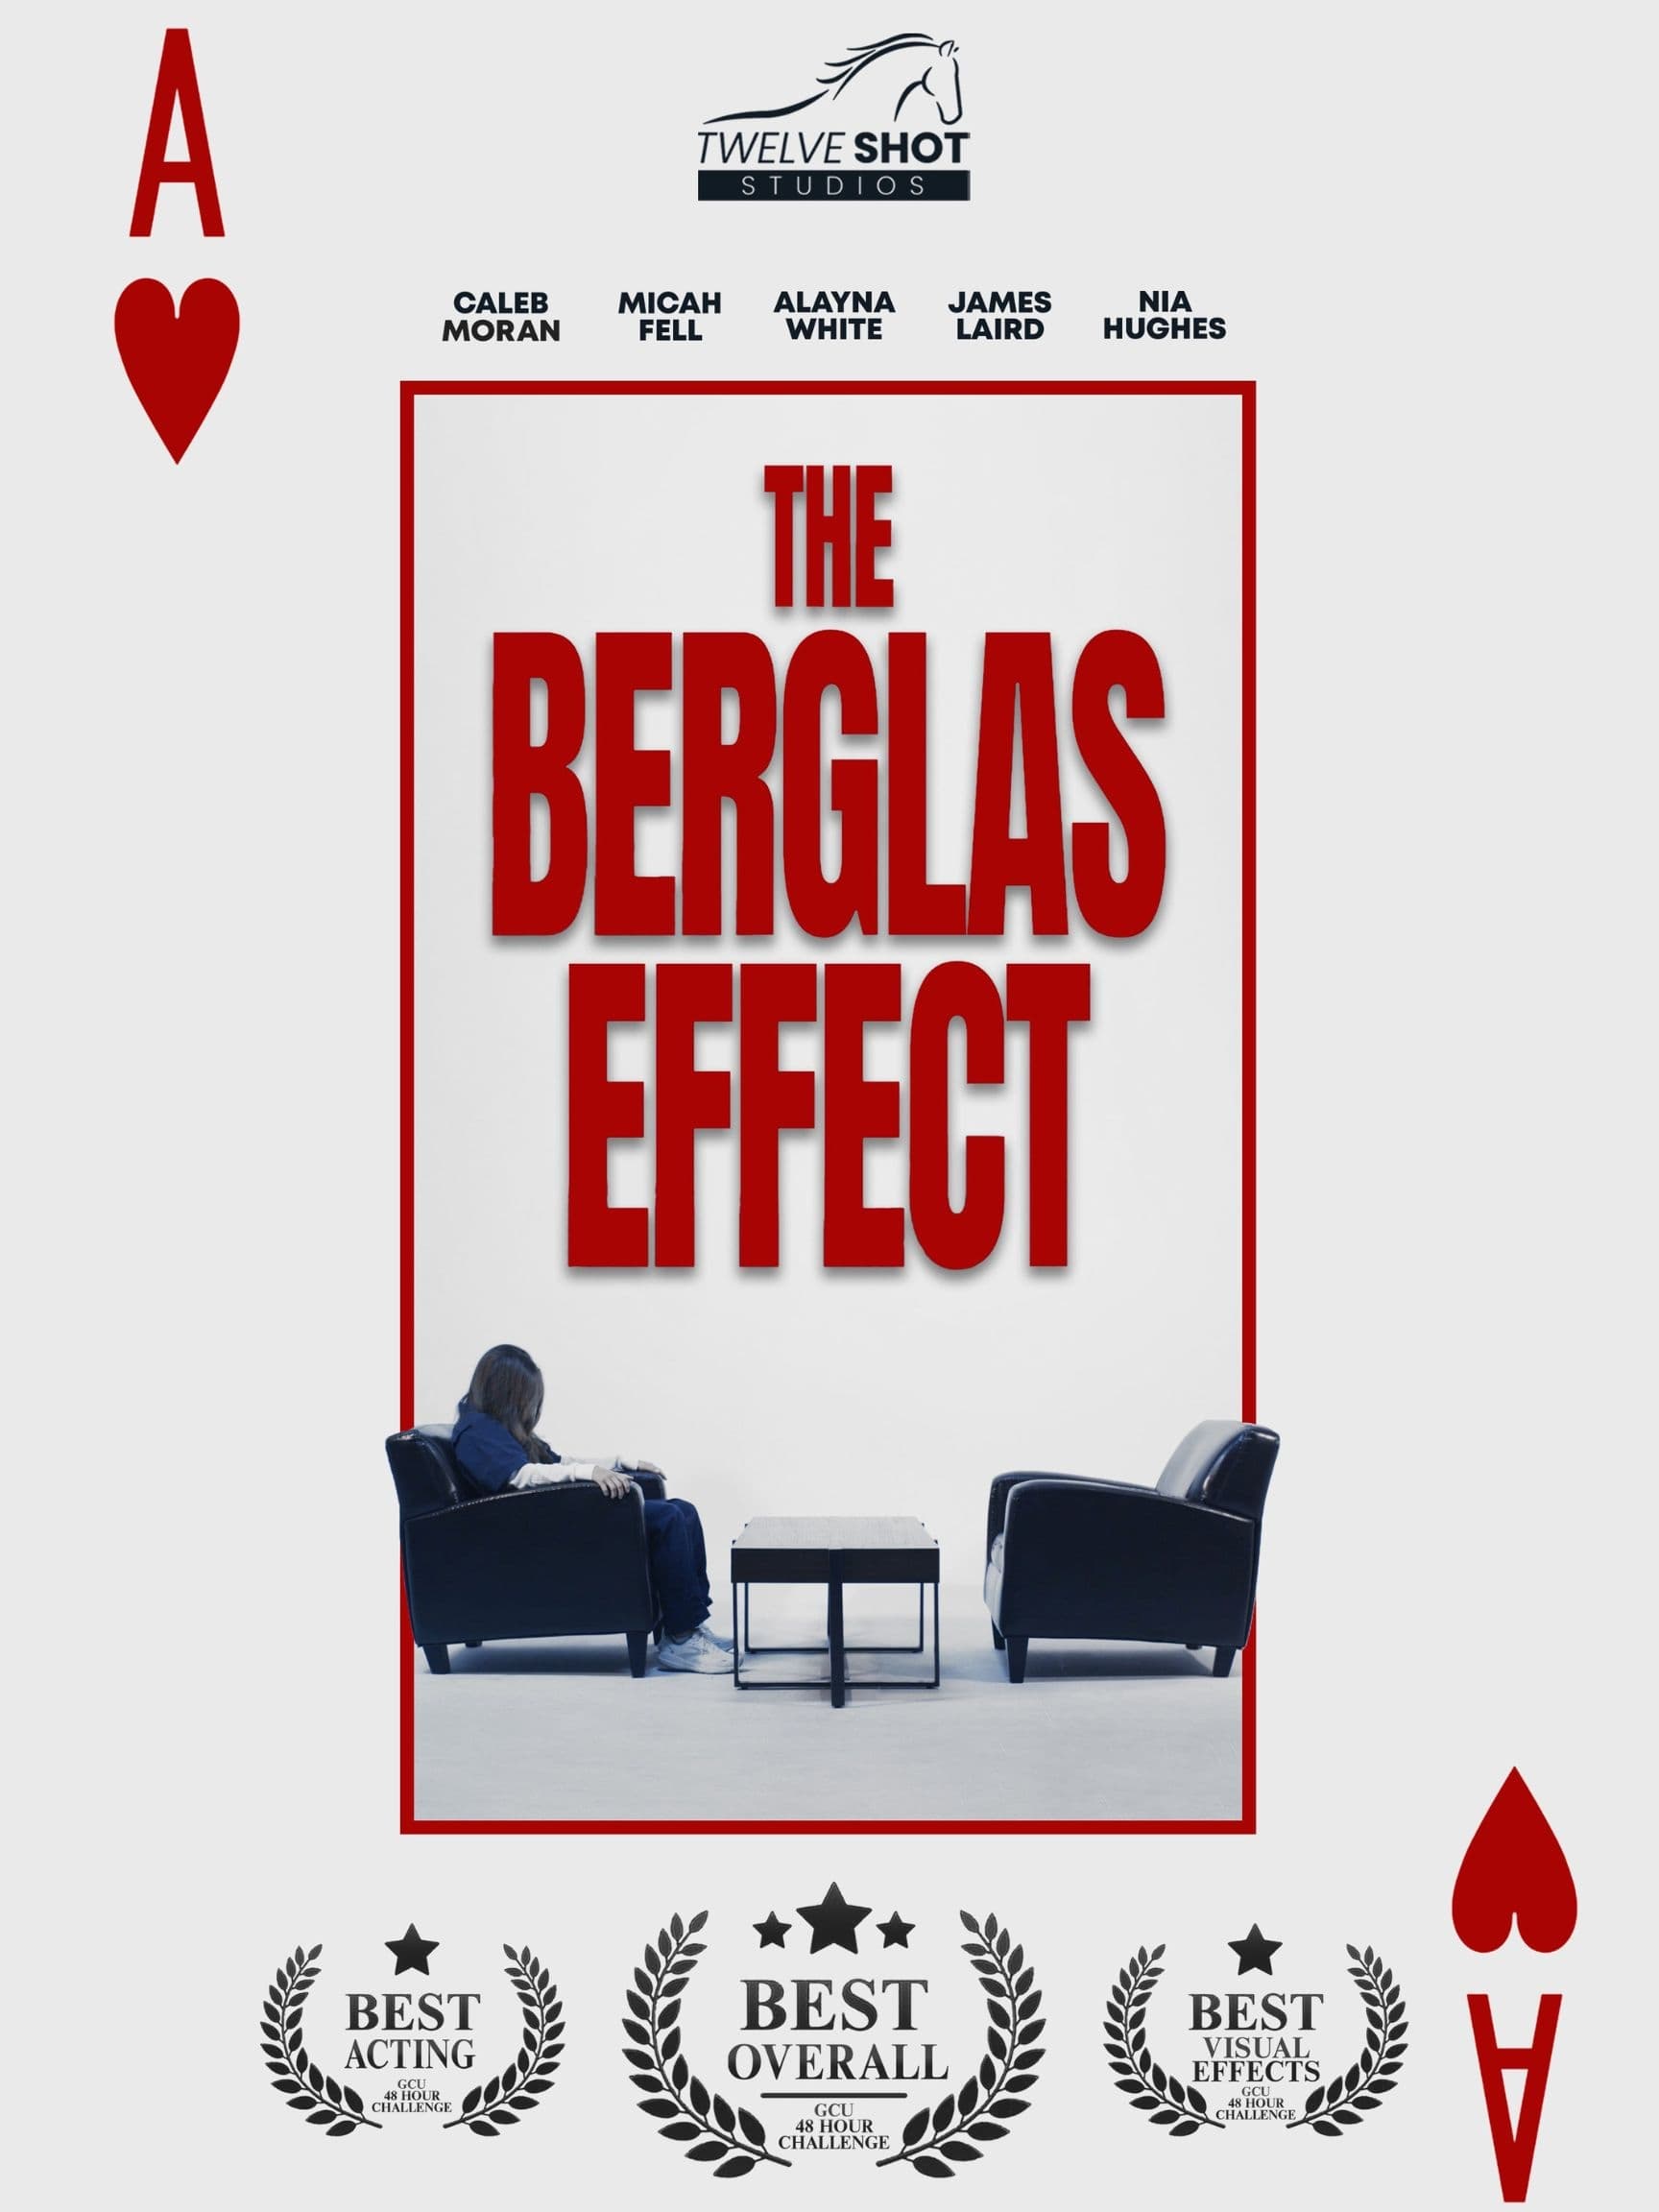 The Berglas Effect